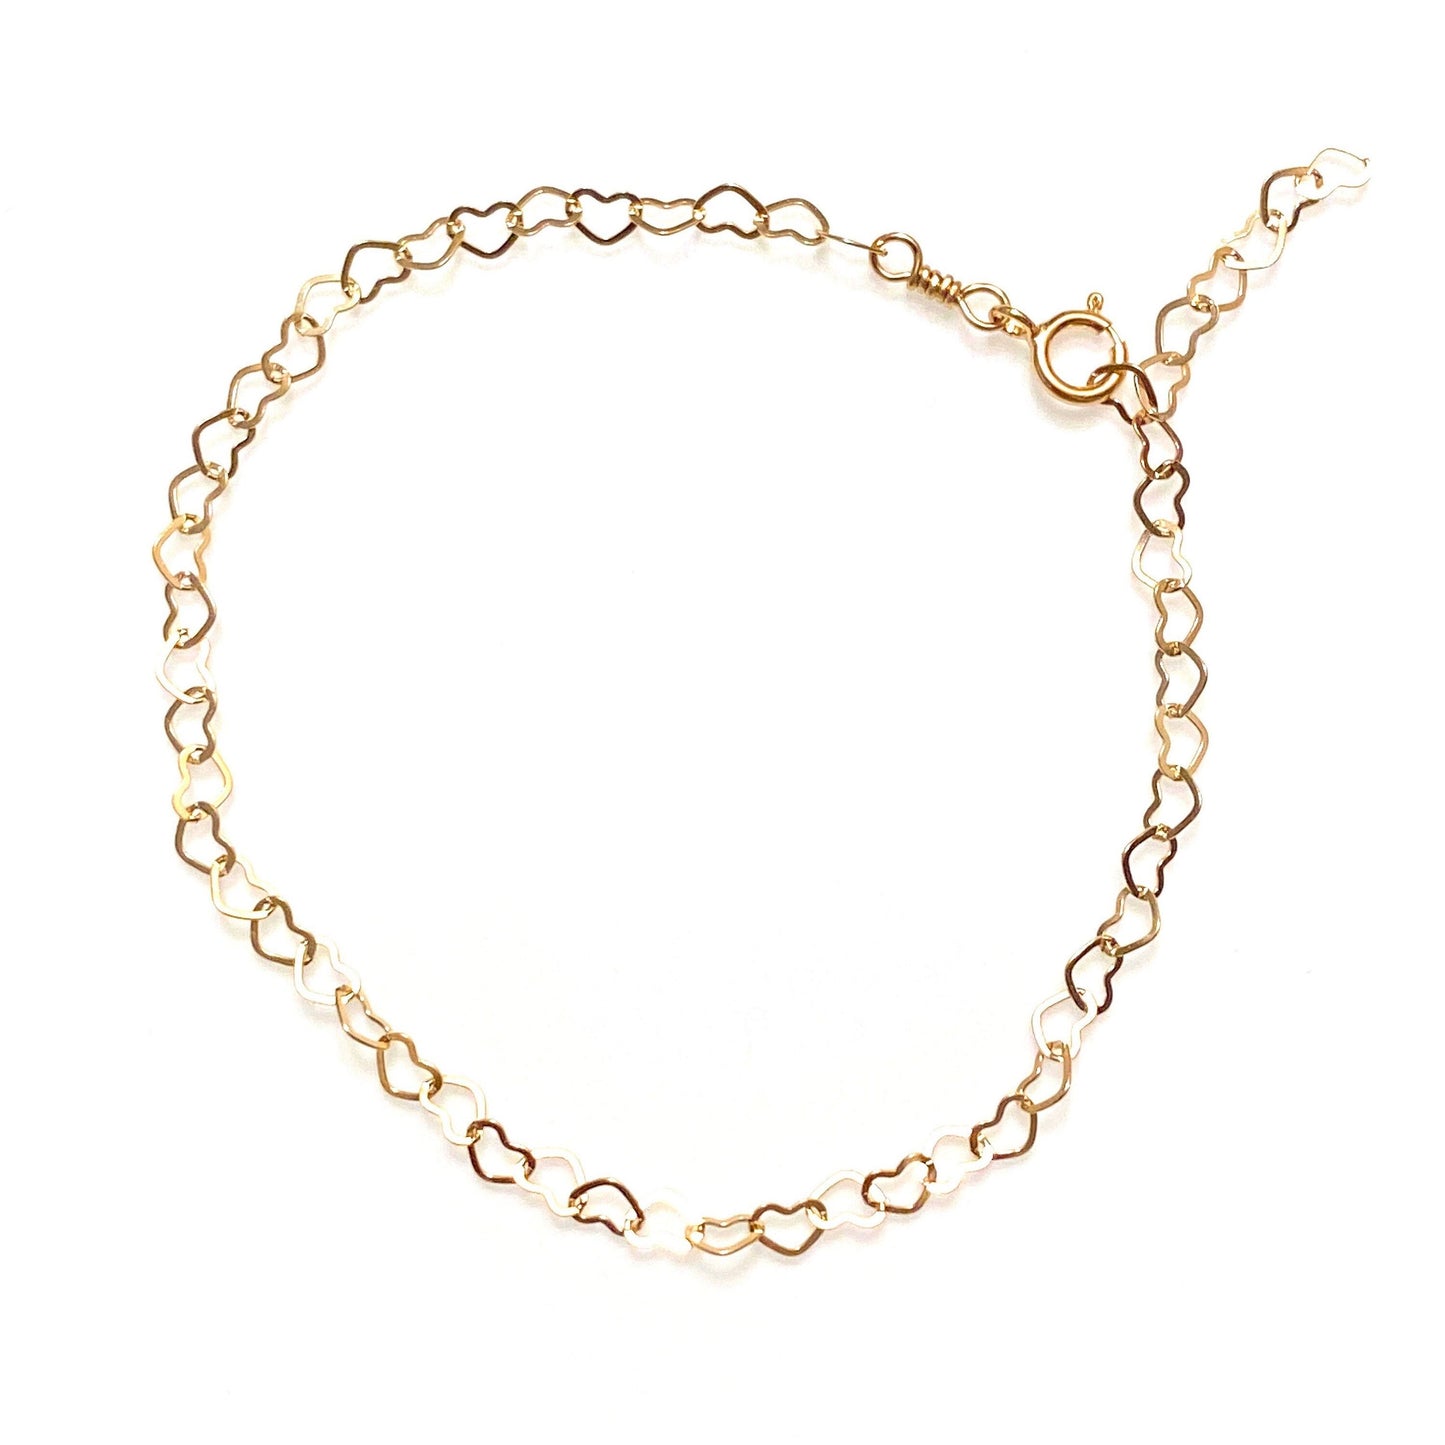 Dainty heart chain bracelet (12K gold-filled, shower safe)